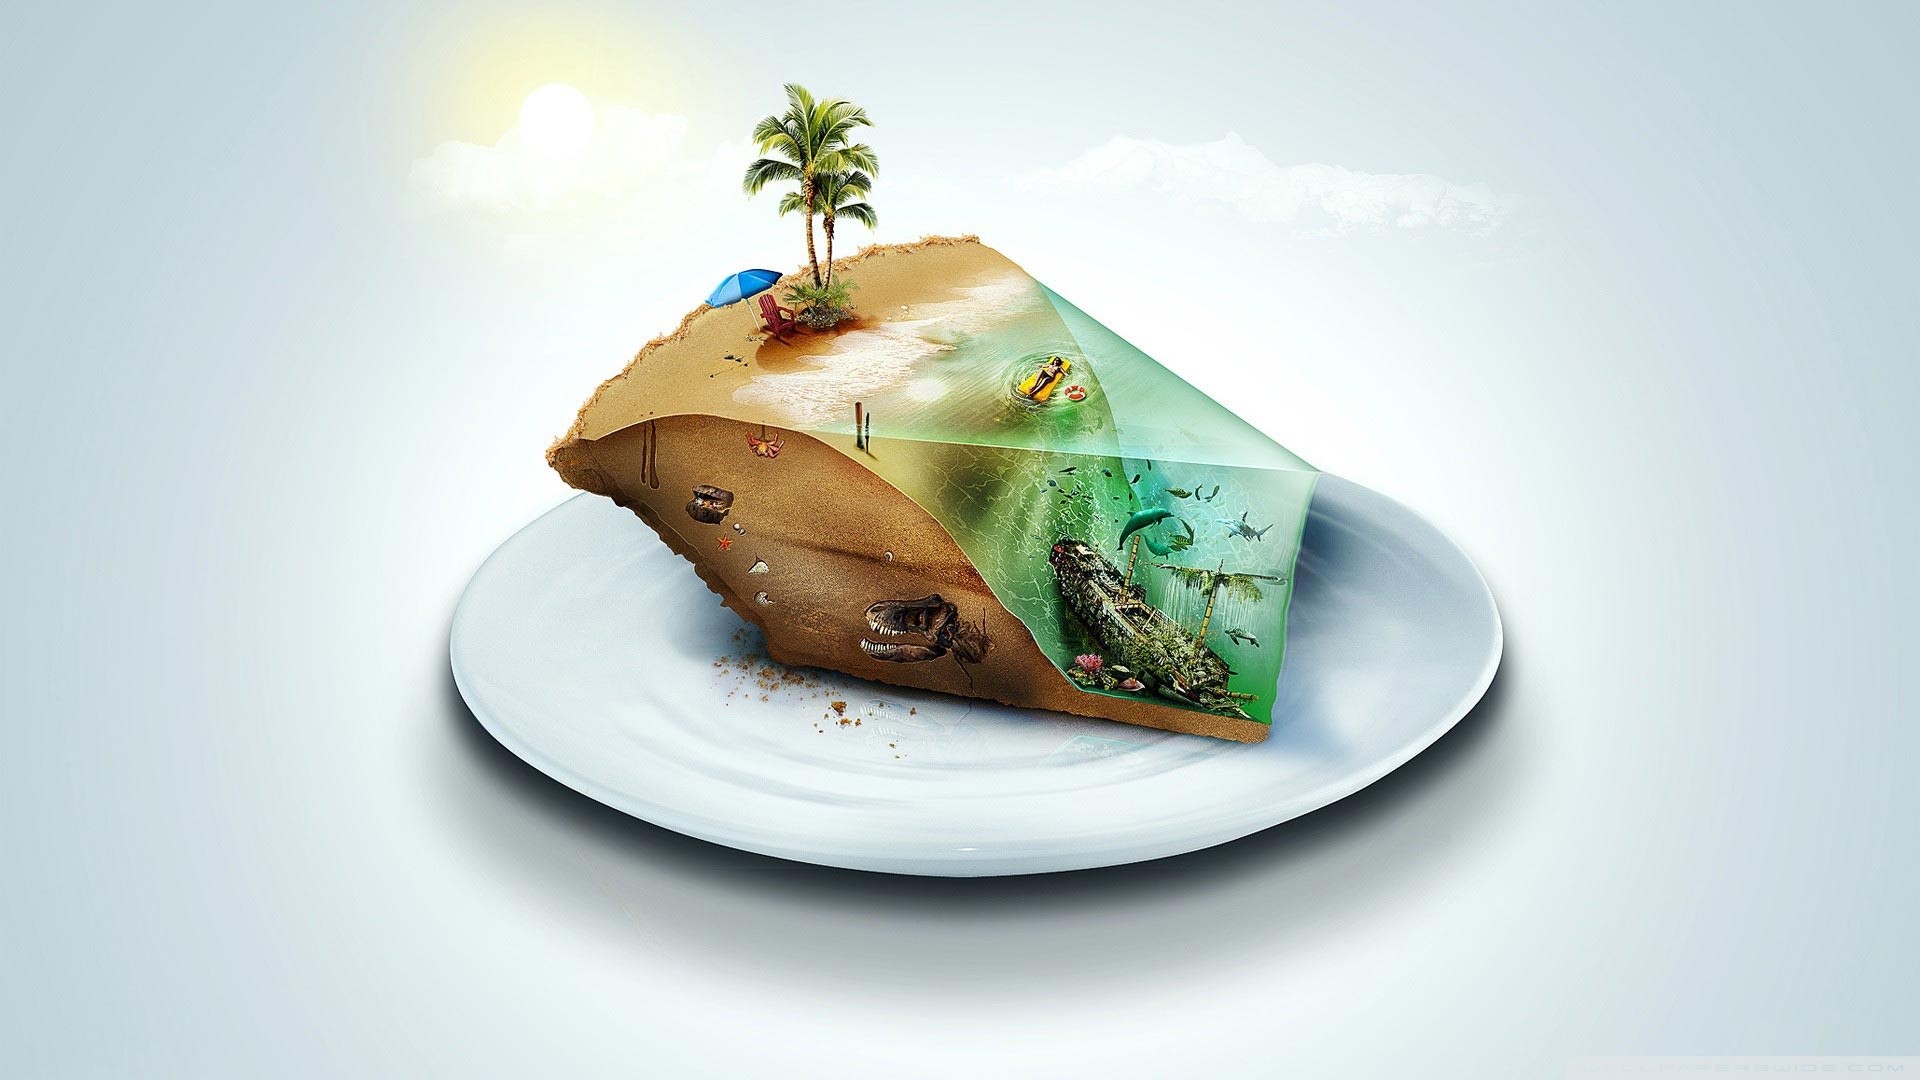 General 1920x1080 digital art cake beach shipwreck palm trees dinosaurs fish tropic island tropical water